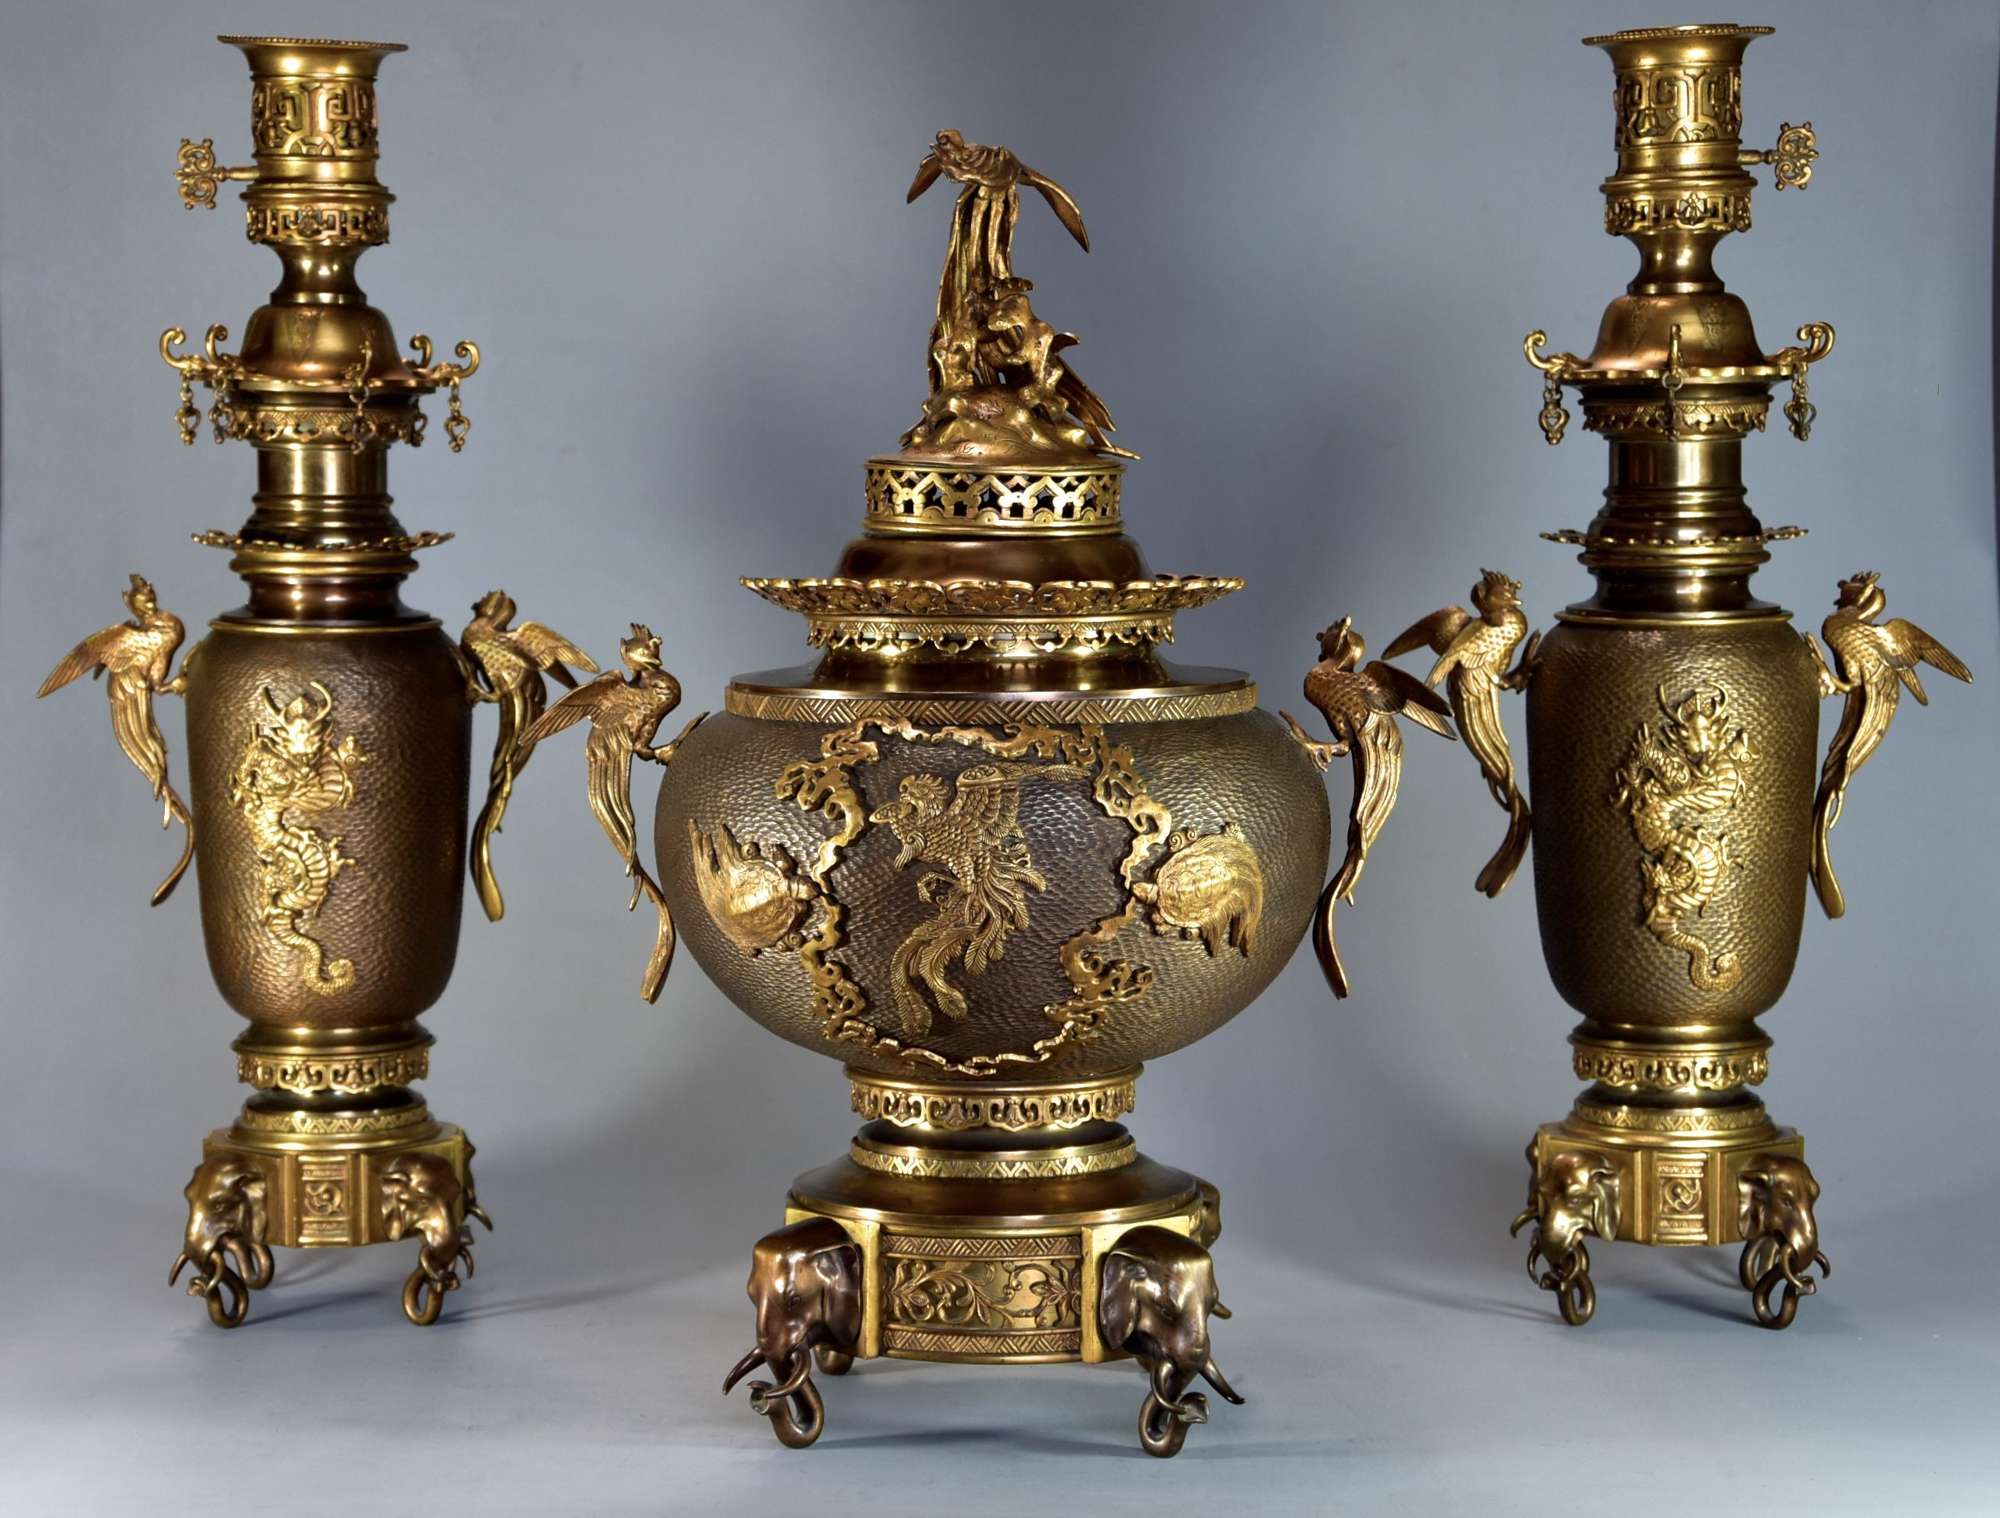 Fine quality French Japonisme style bronze incense burner set